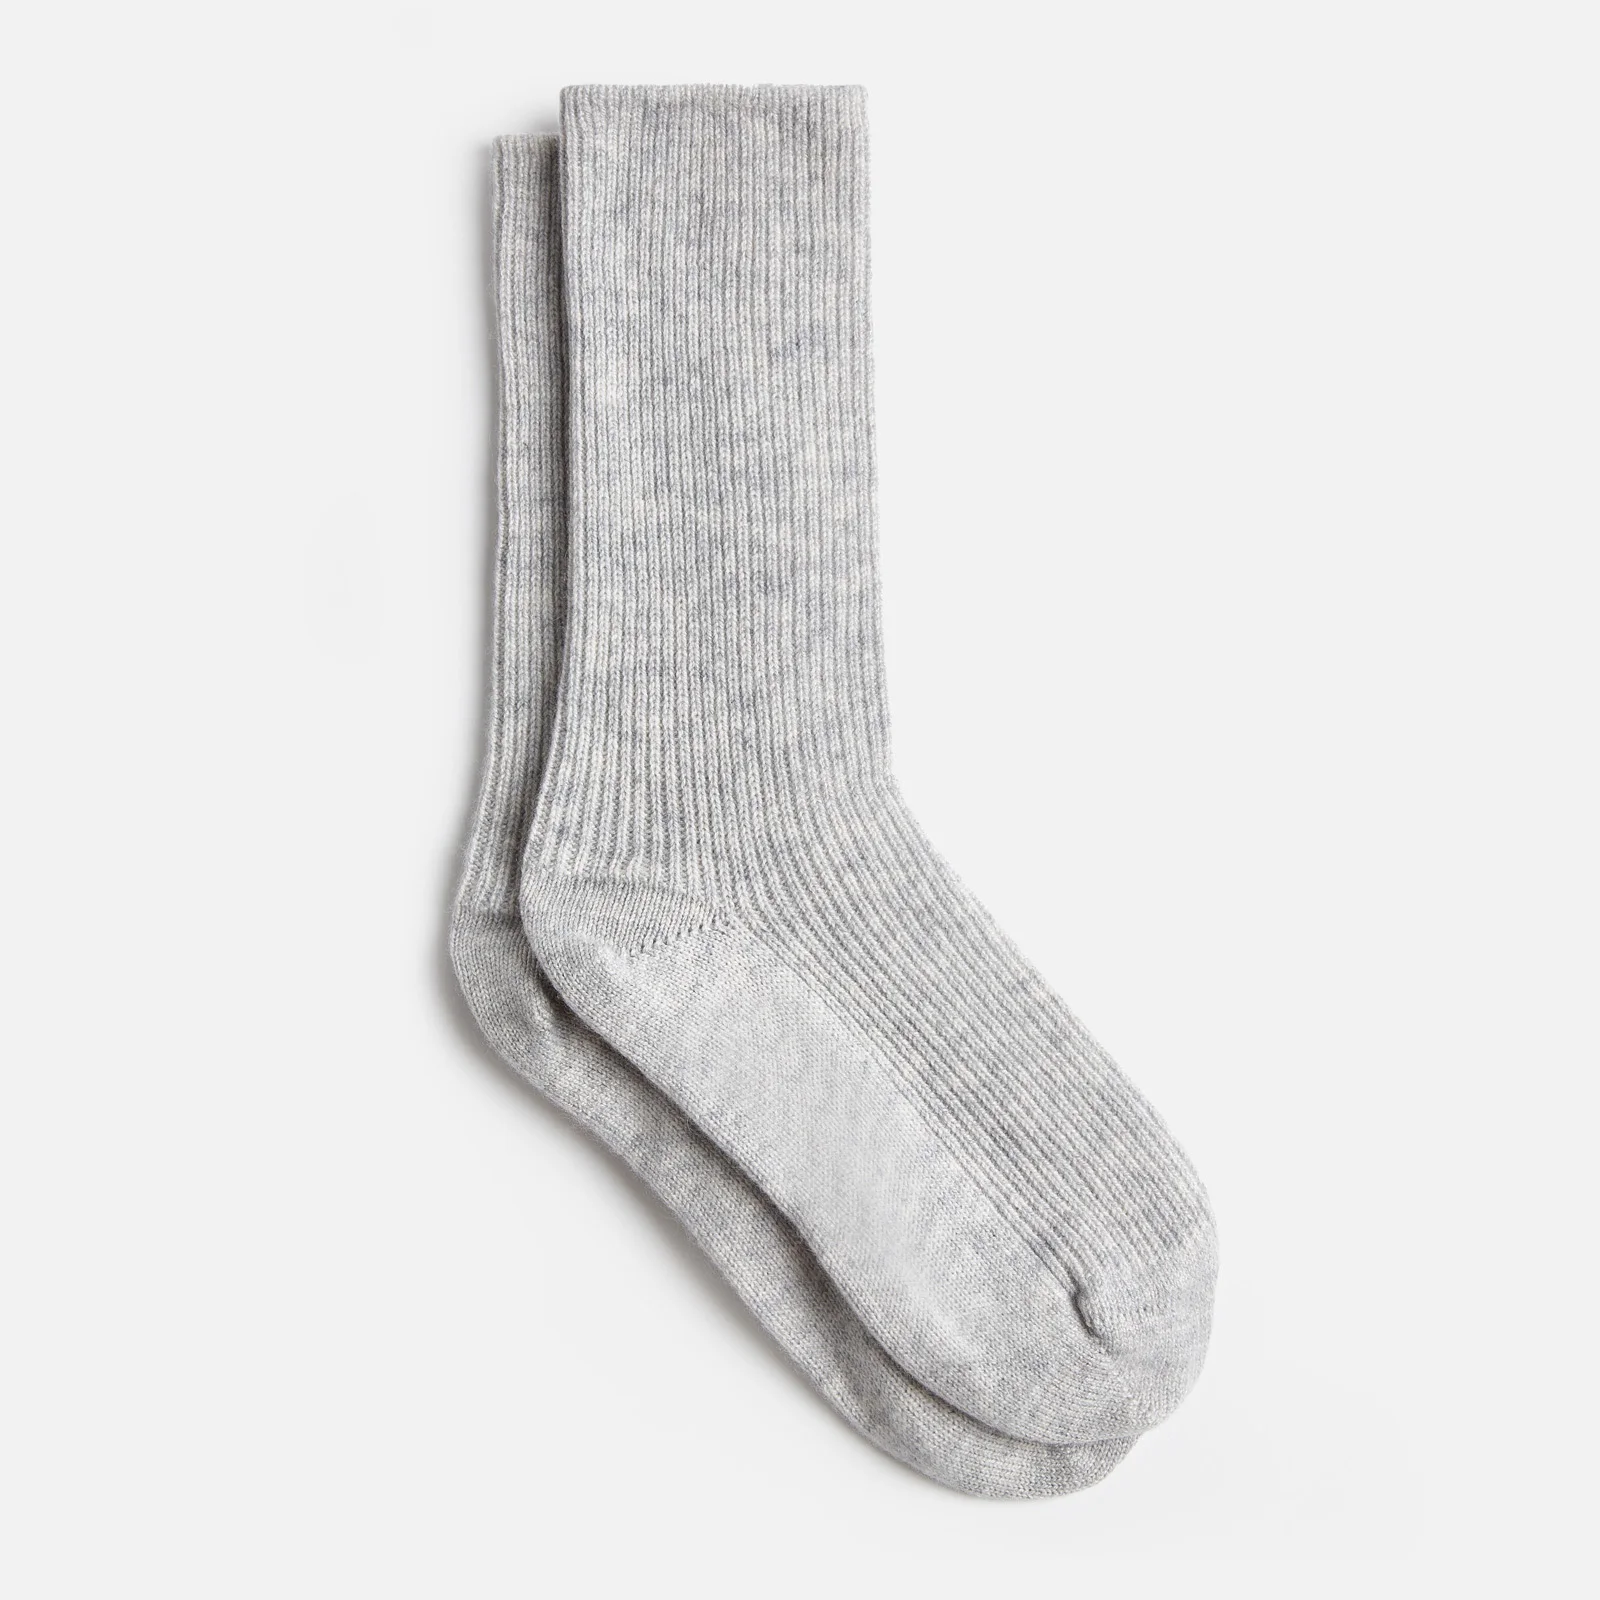 ESPA Home Cashmere Ribbed Knit Socks - Silver Image 1